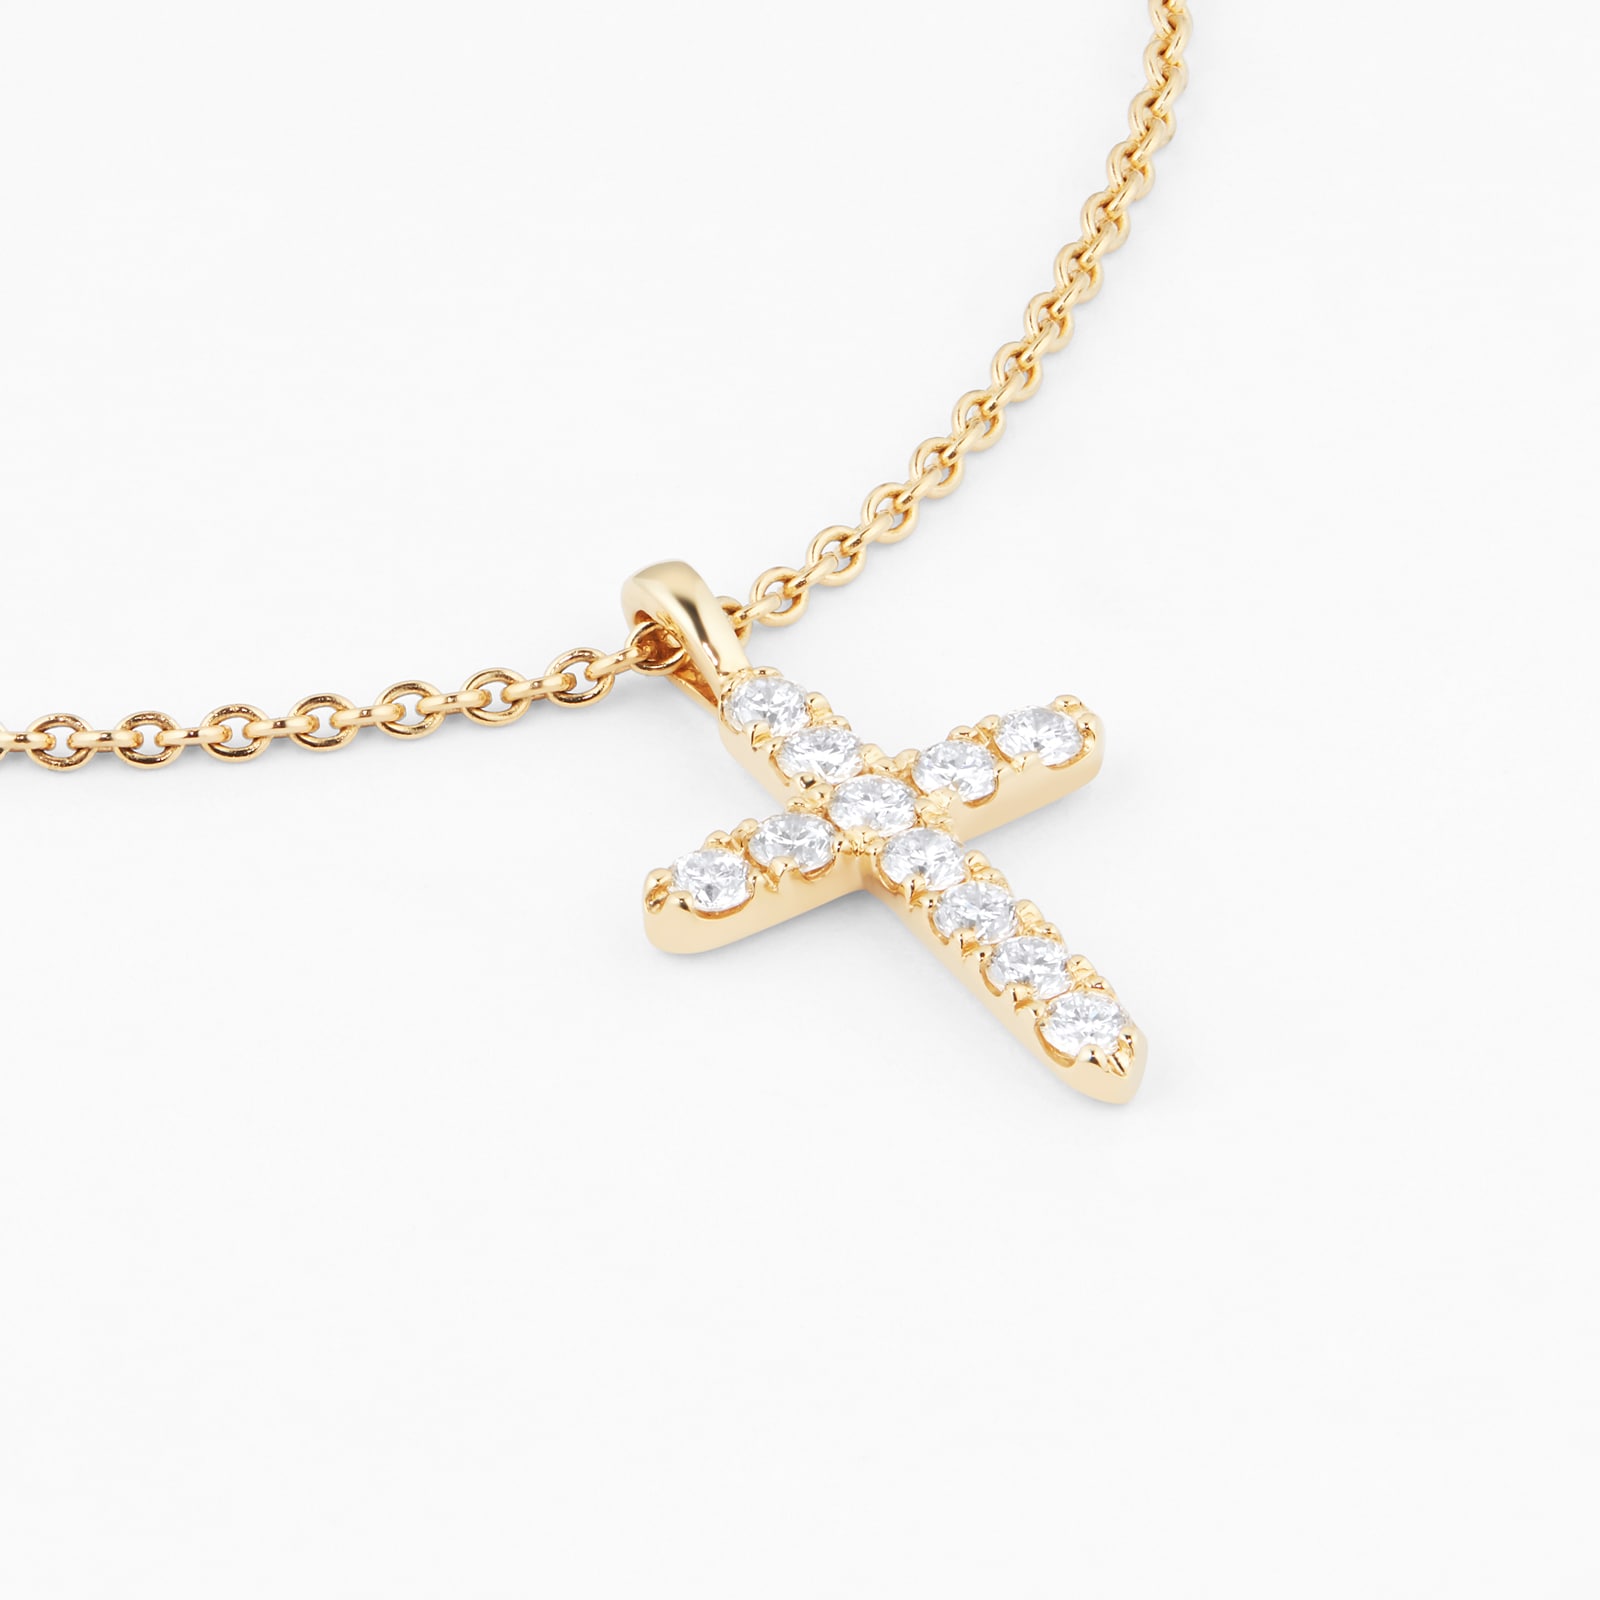 Cross Necklace R16155:6006:P 14KY - Religious Necklaces | Ross Elliott  Jewelers | Terre Haute, IN